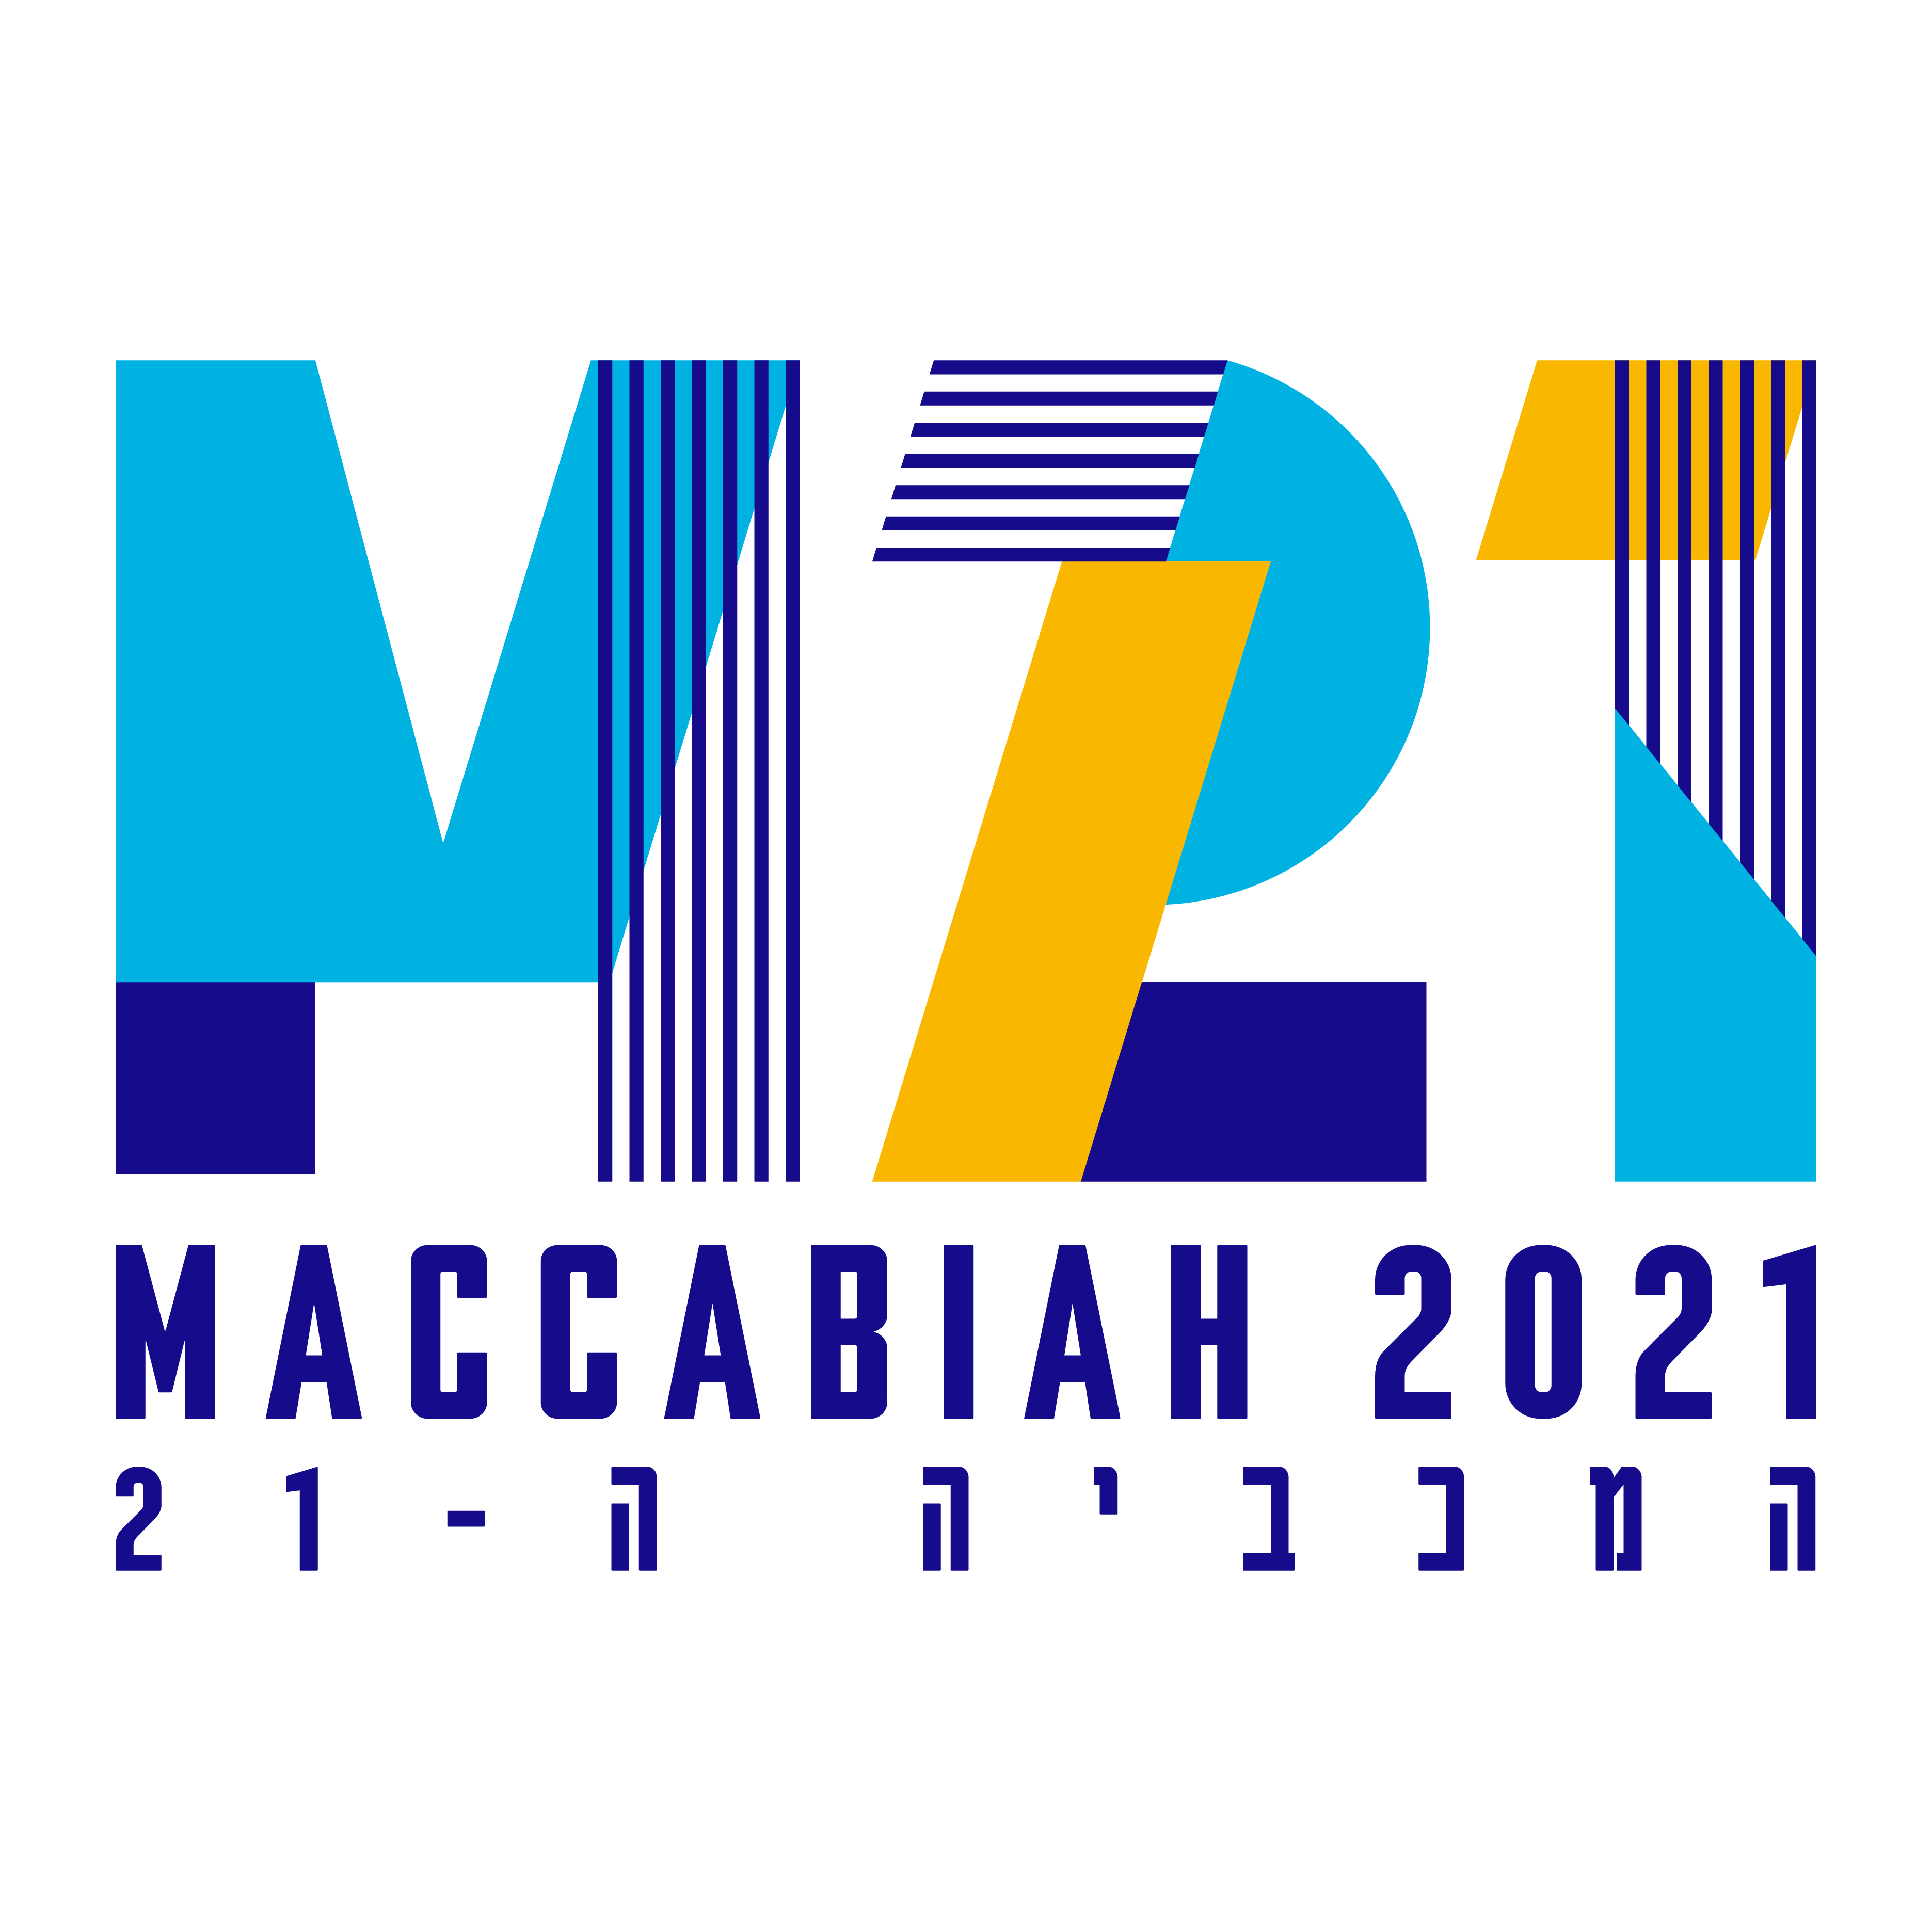 MAC21\Maccabiah 2021 Brand book\M21 logo for Facebook - Profile.jpg - הגדלת תמונה עם לייטבוקס